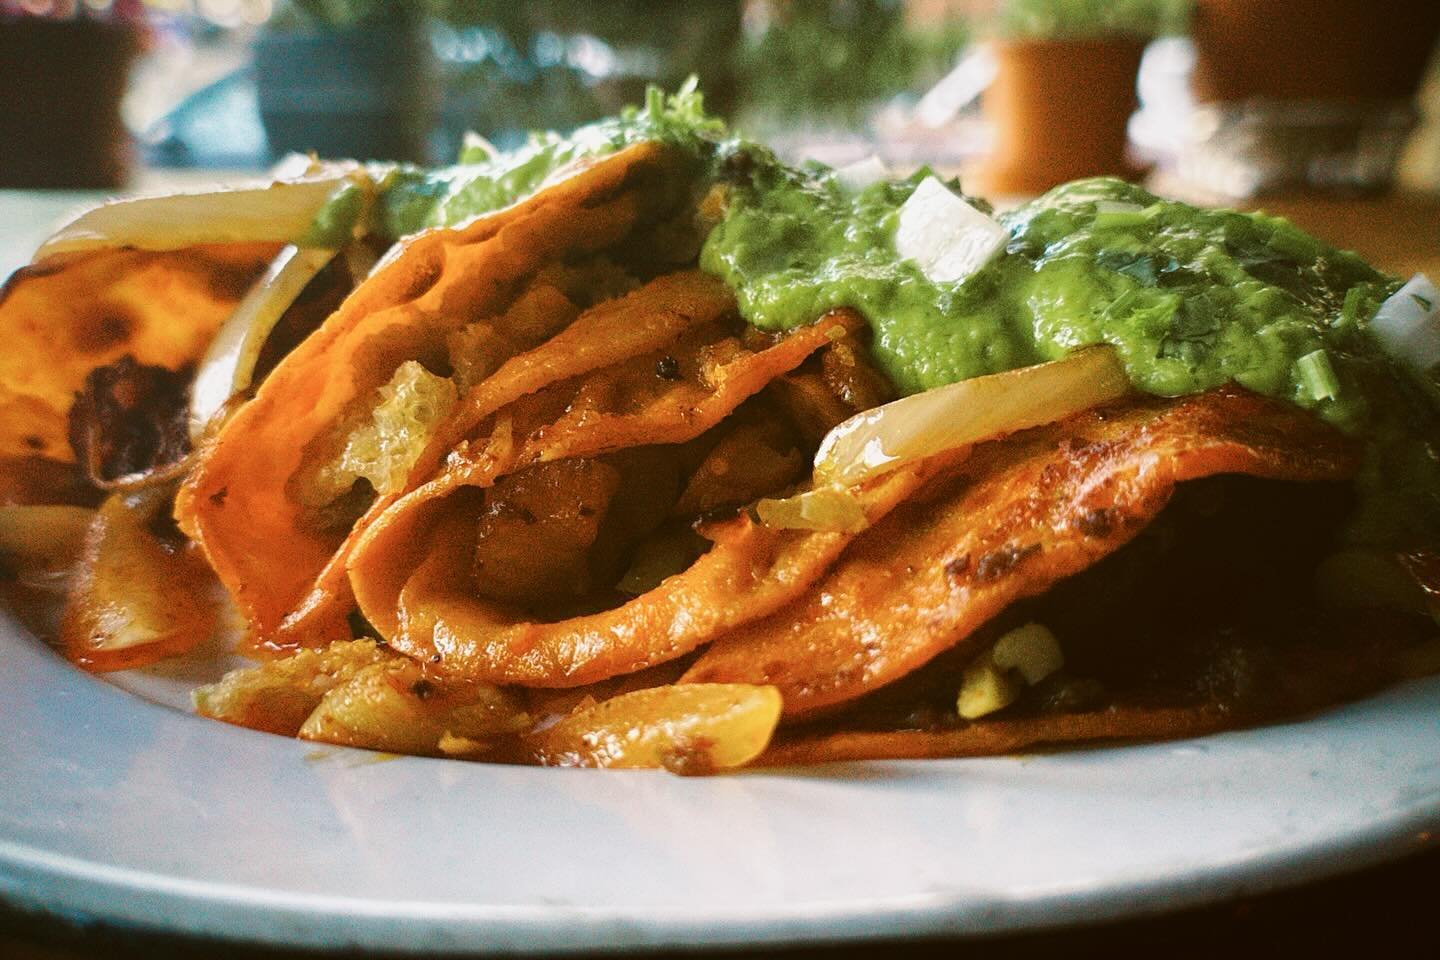 Tacos De Canasta #gordoscantina #authenicmexican #mexicanstreetfood #tacos #decanasta #baskettaco #steamedtaco #breakfast #brunch #offmenu #epspecial #daily #cincodemayo #bushwick #brooklyn #nyc #nymademexicoapproved